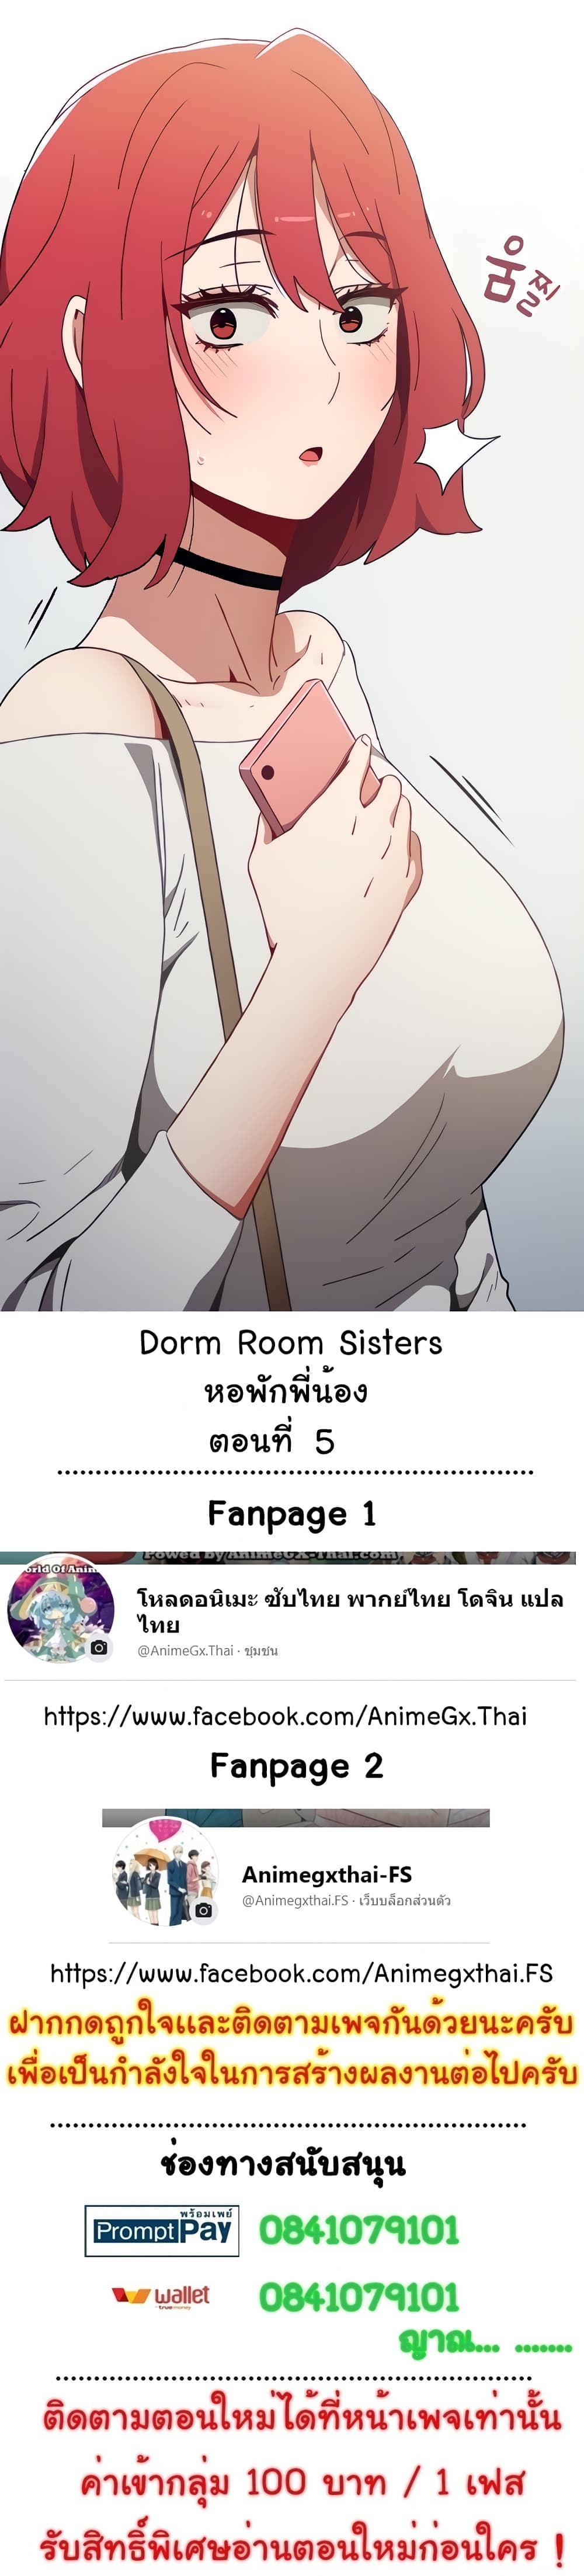 Dorm Room Sisters 5 01